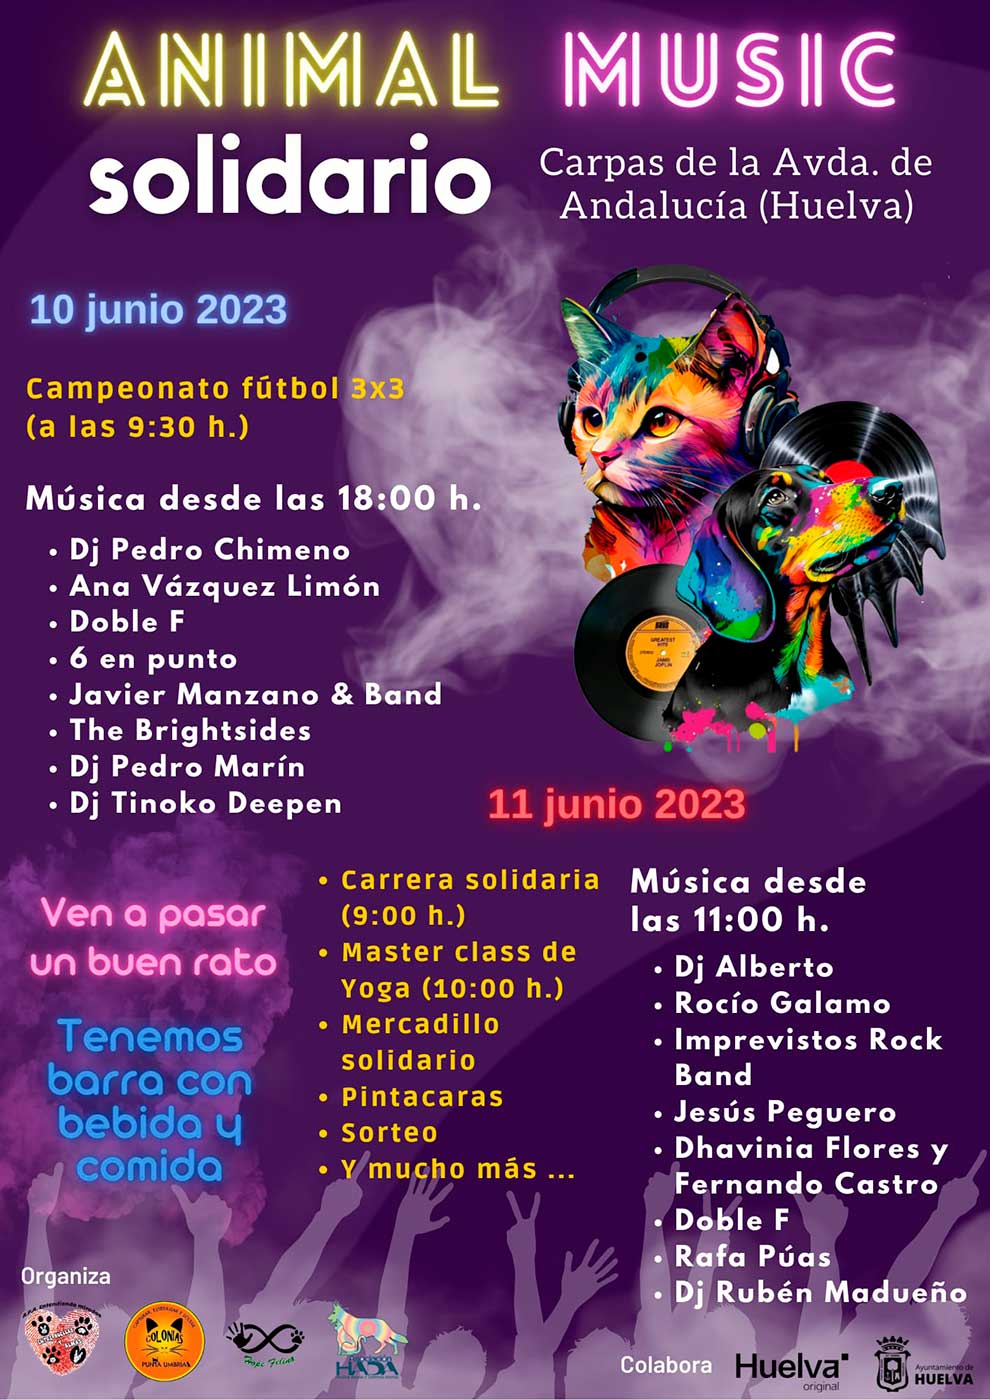 Animal Music 2023 Huelva programacion de actividades protectoras de animales 10 de junio carpas avenida de Andalucia